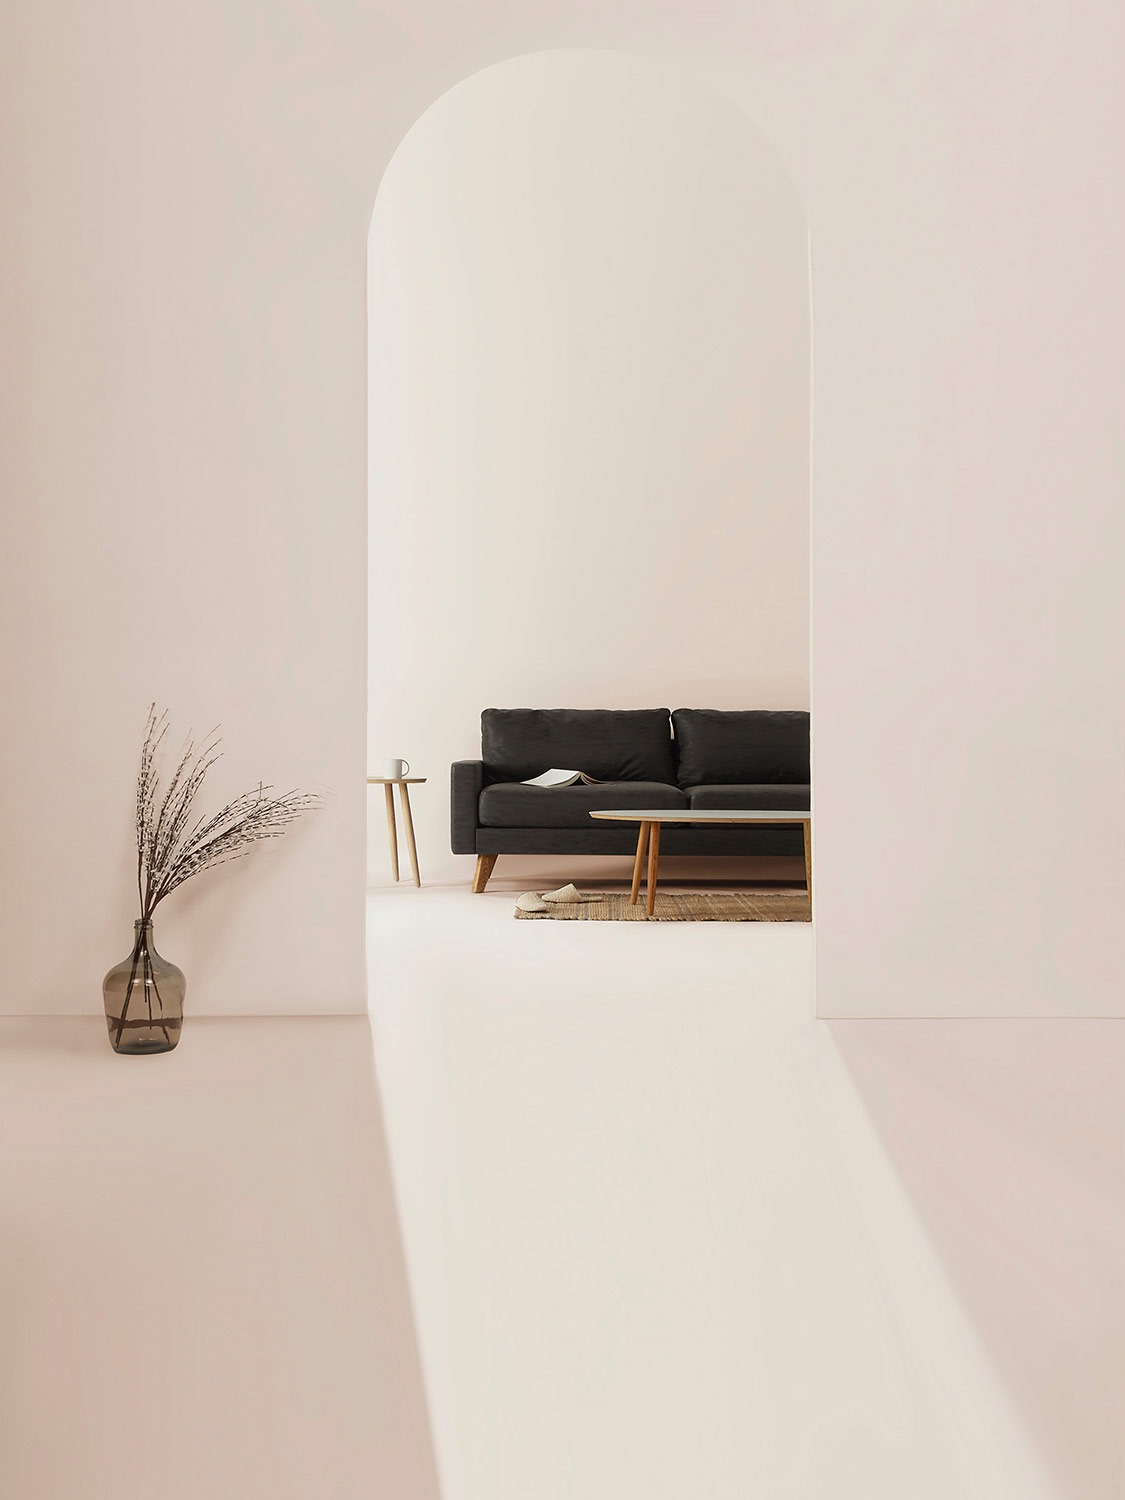 Black sofa and white desk